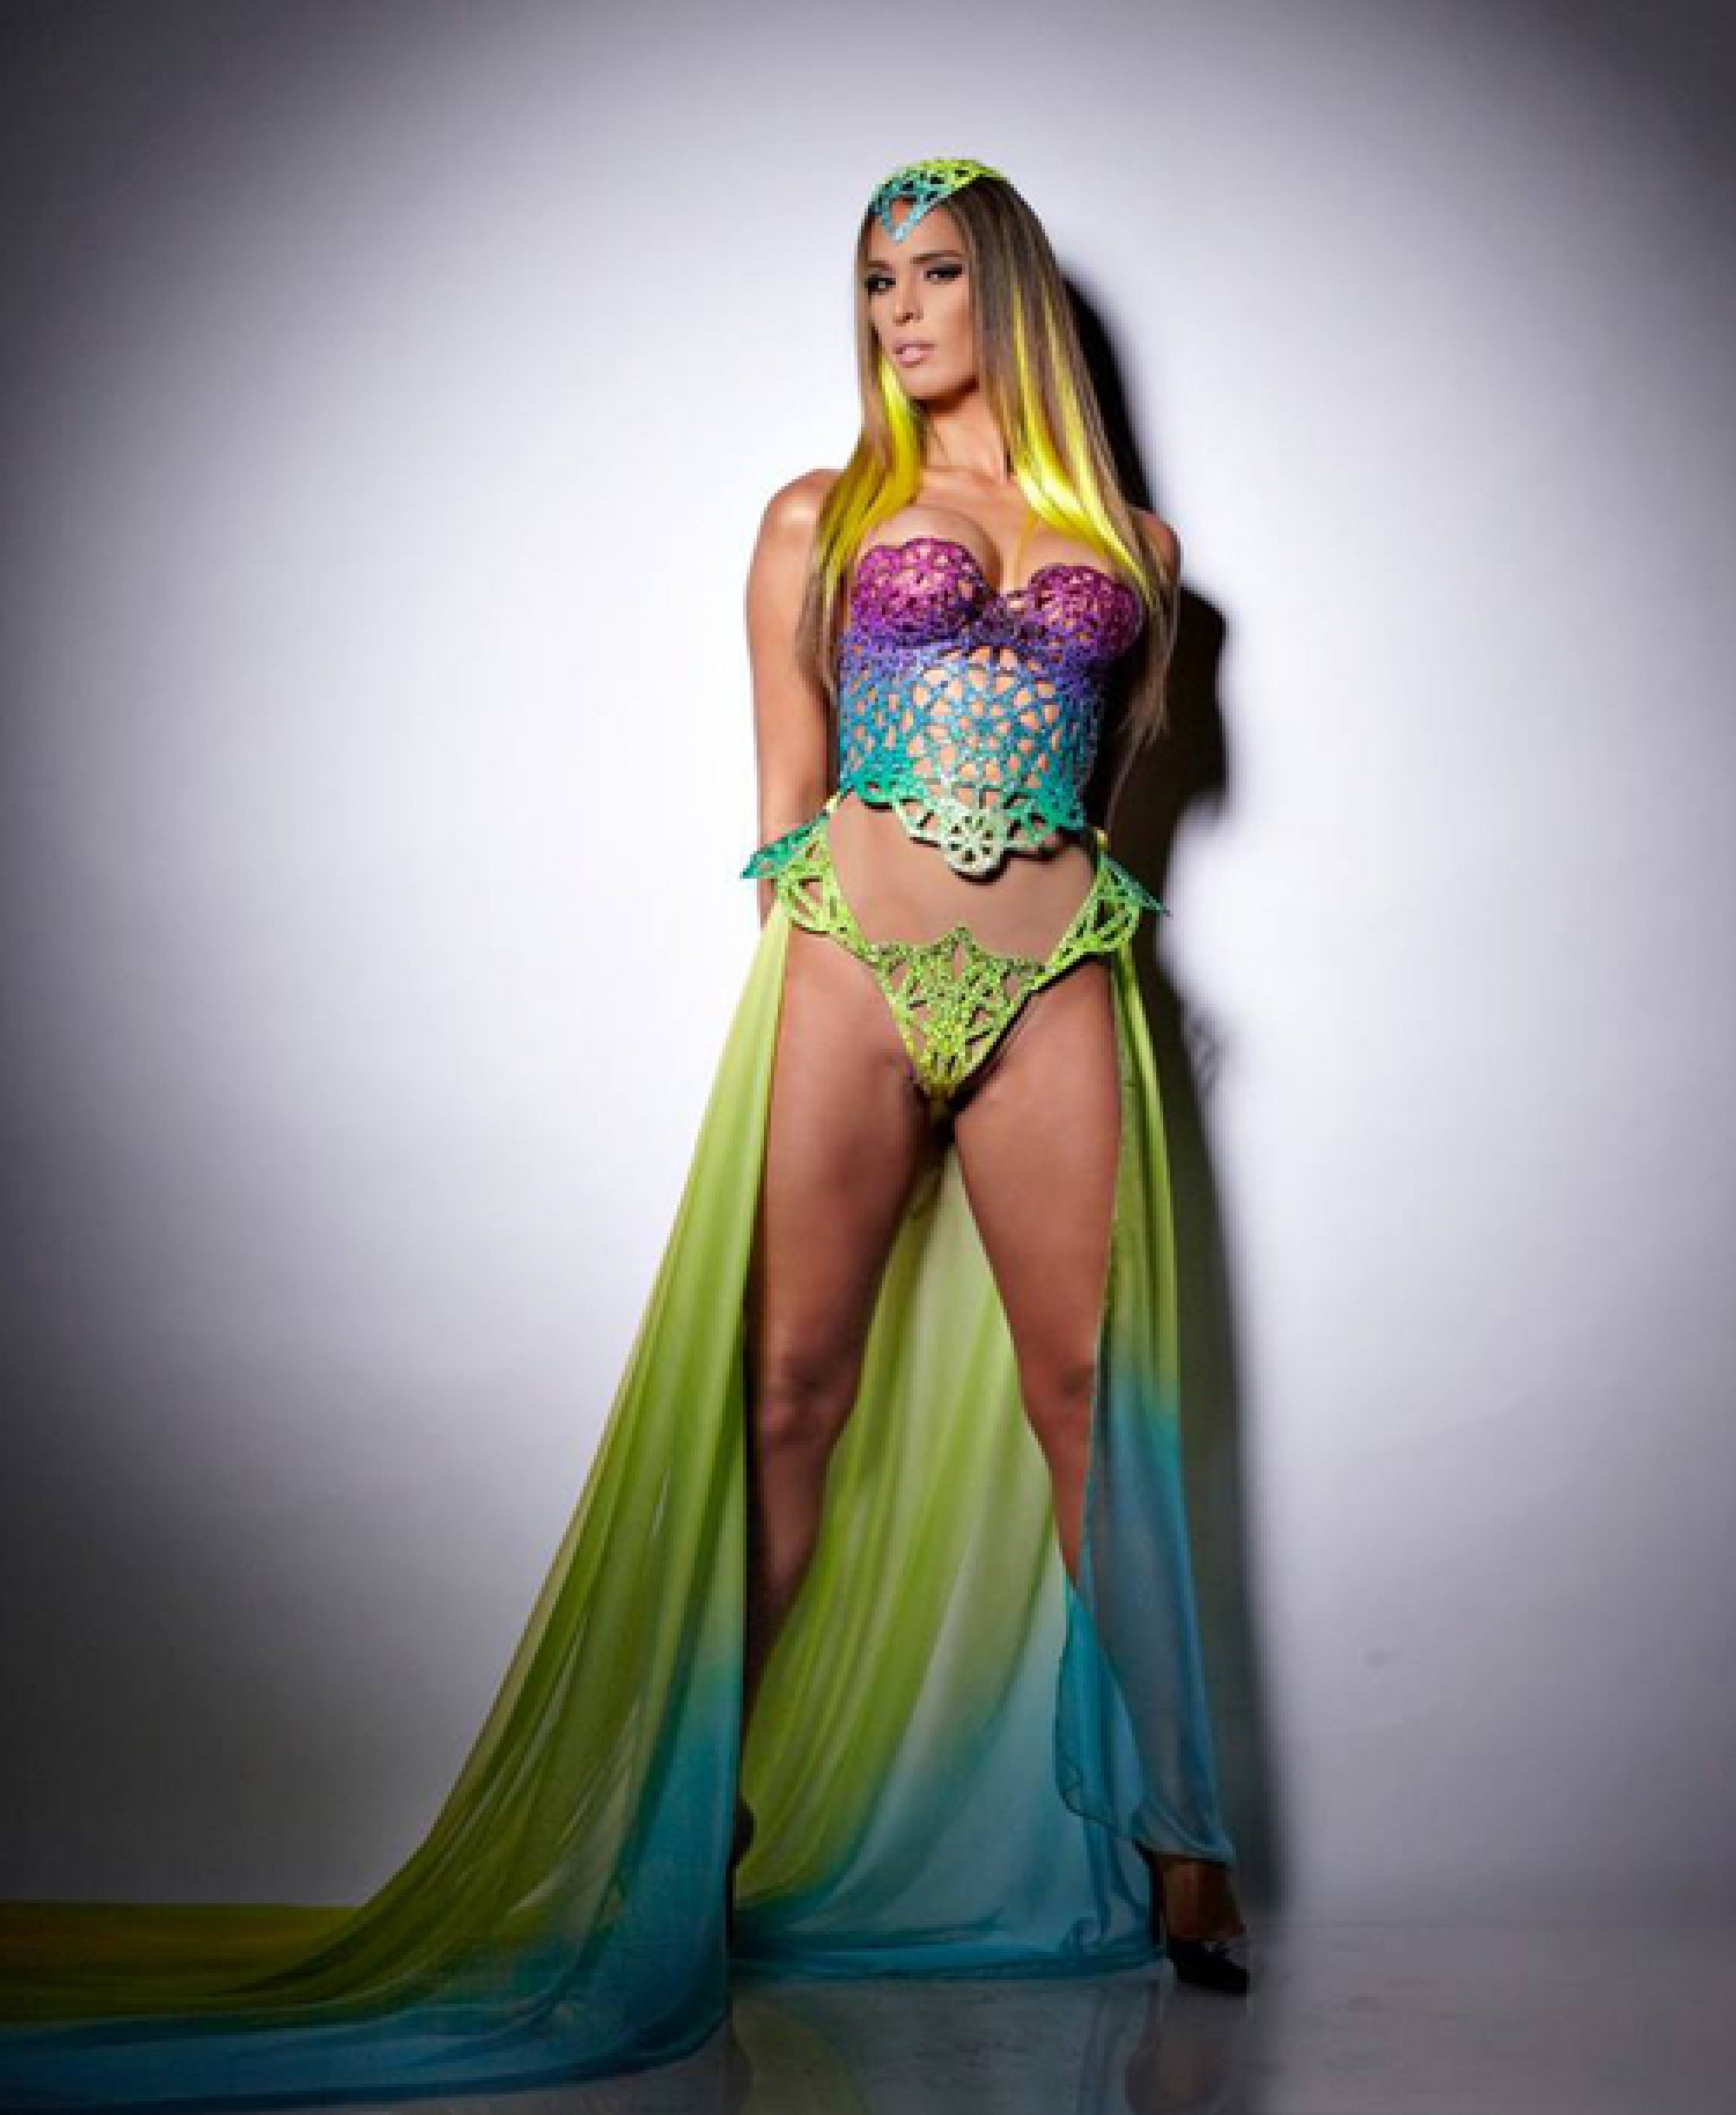 RuPaul's Drag Race star Carmen Carrera poses in first lingerie